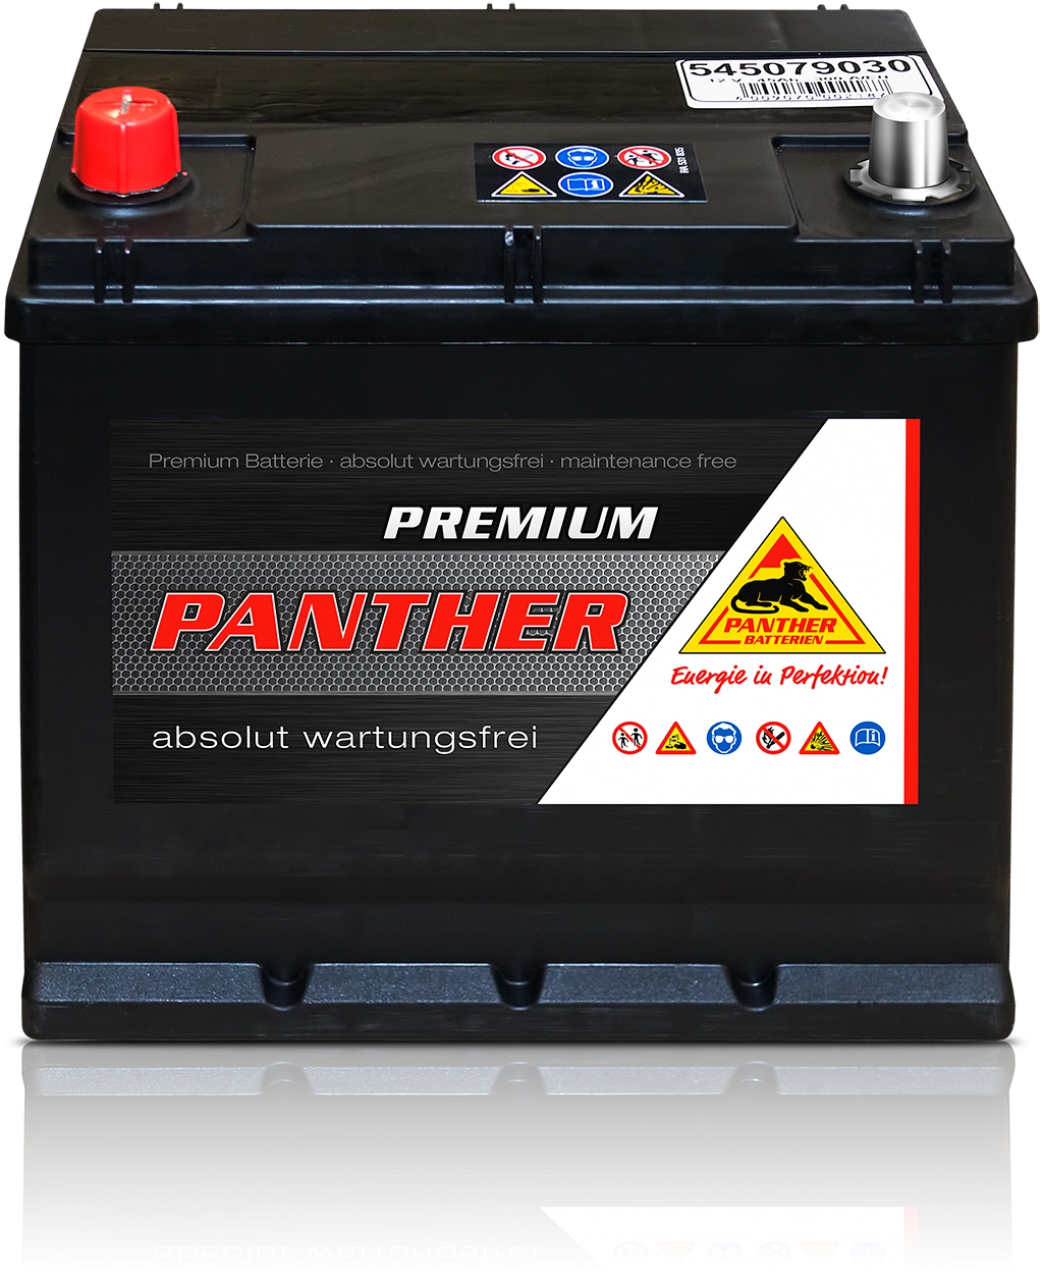 Panther Premium 54580